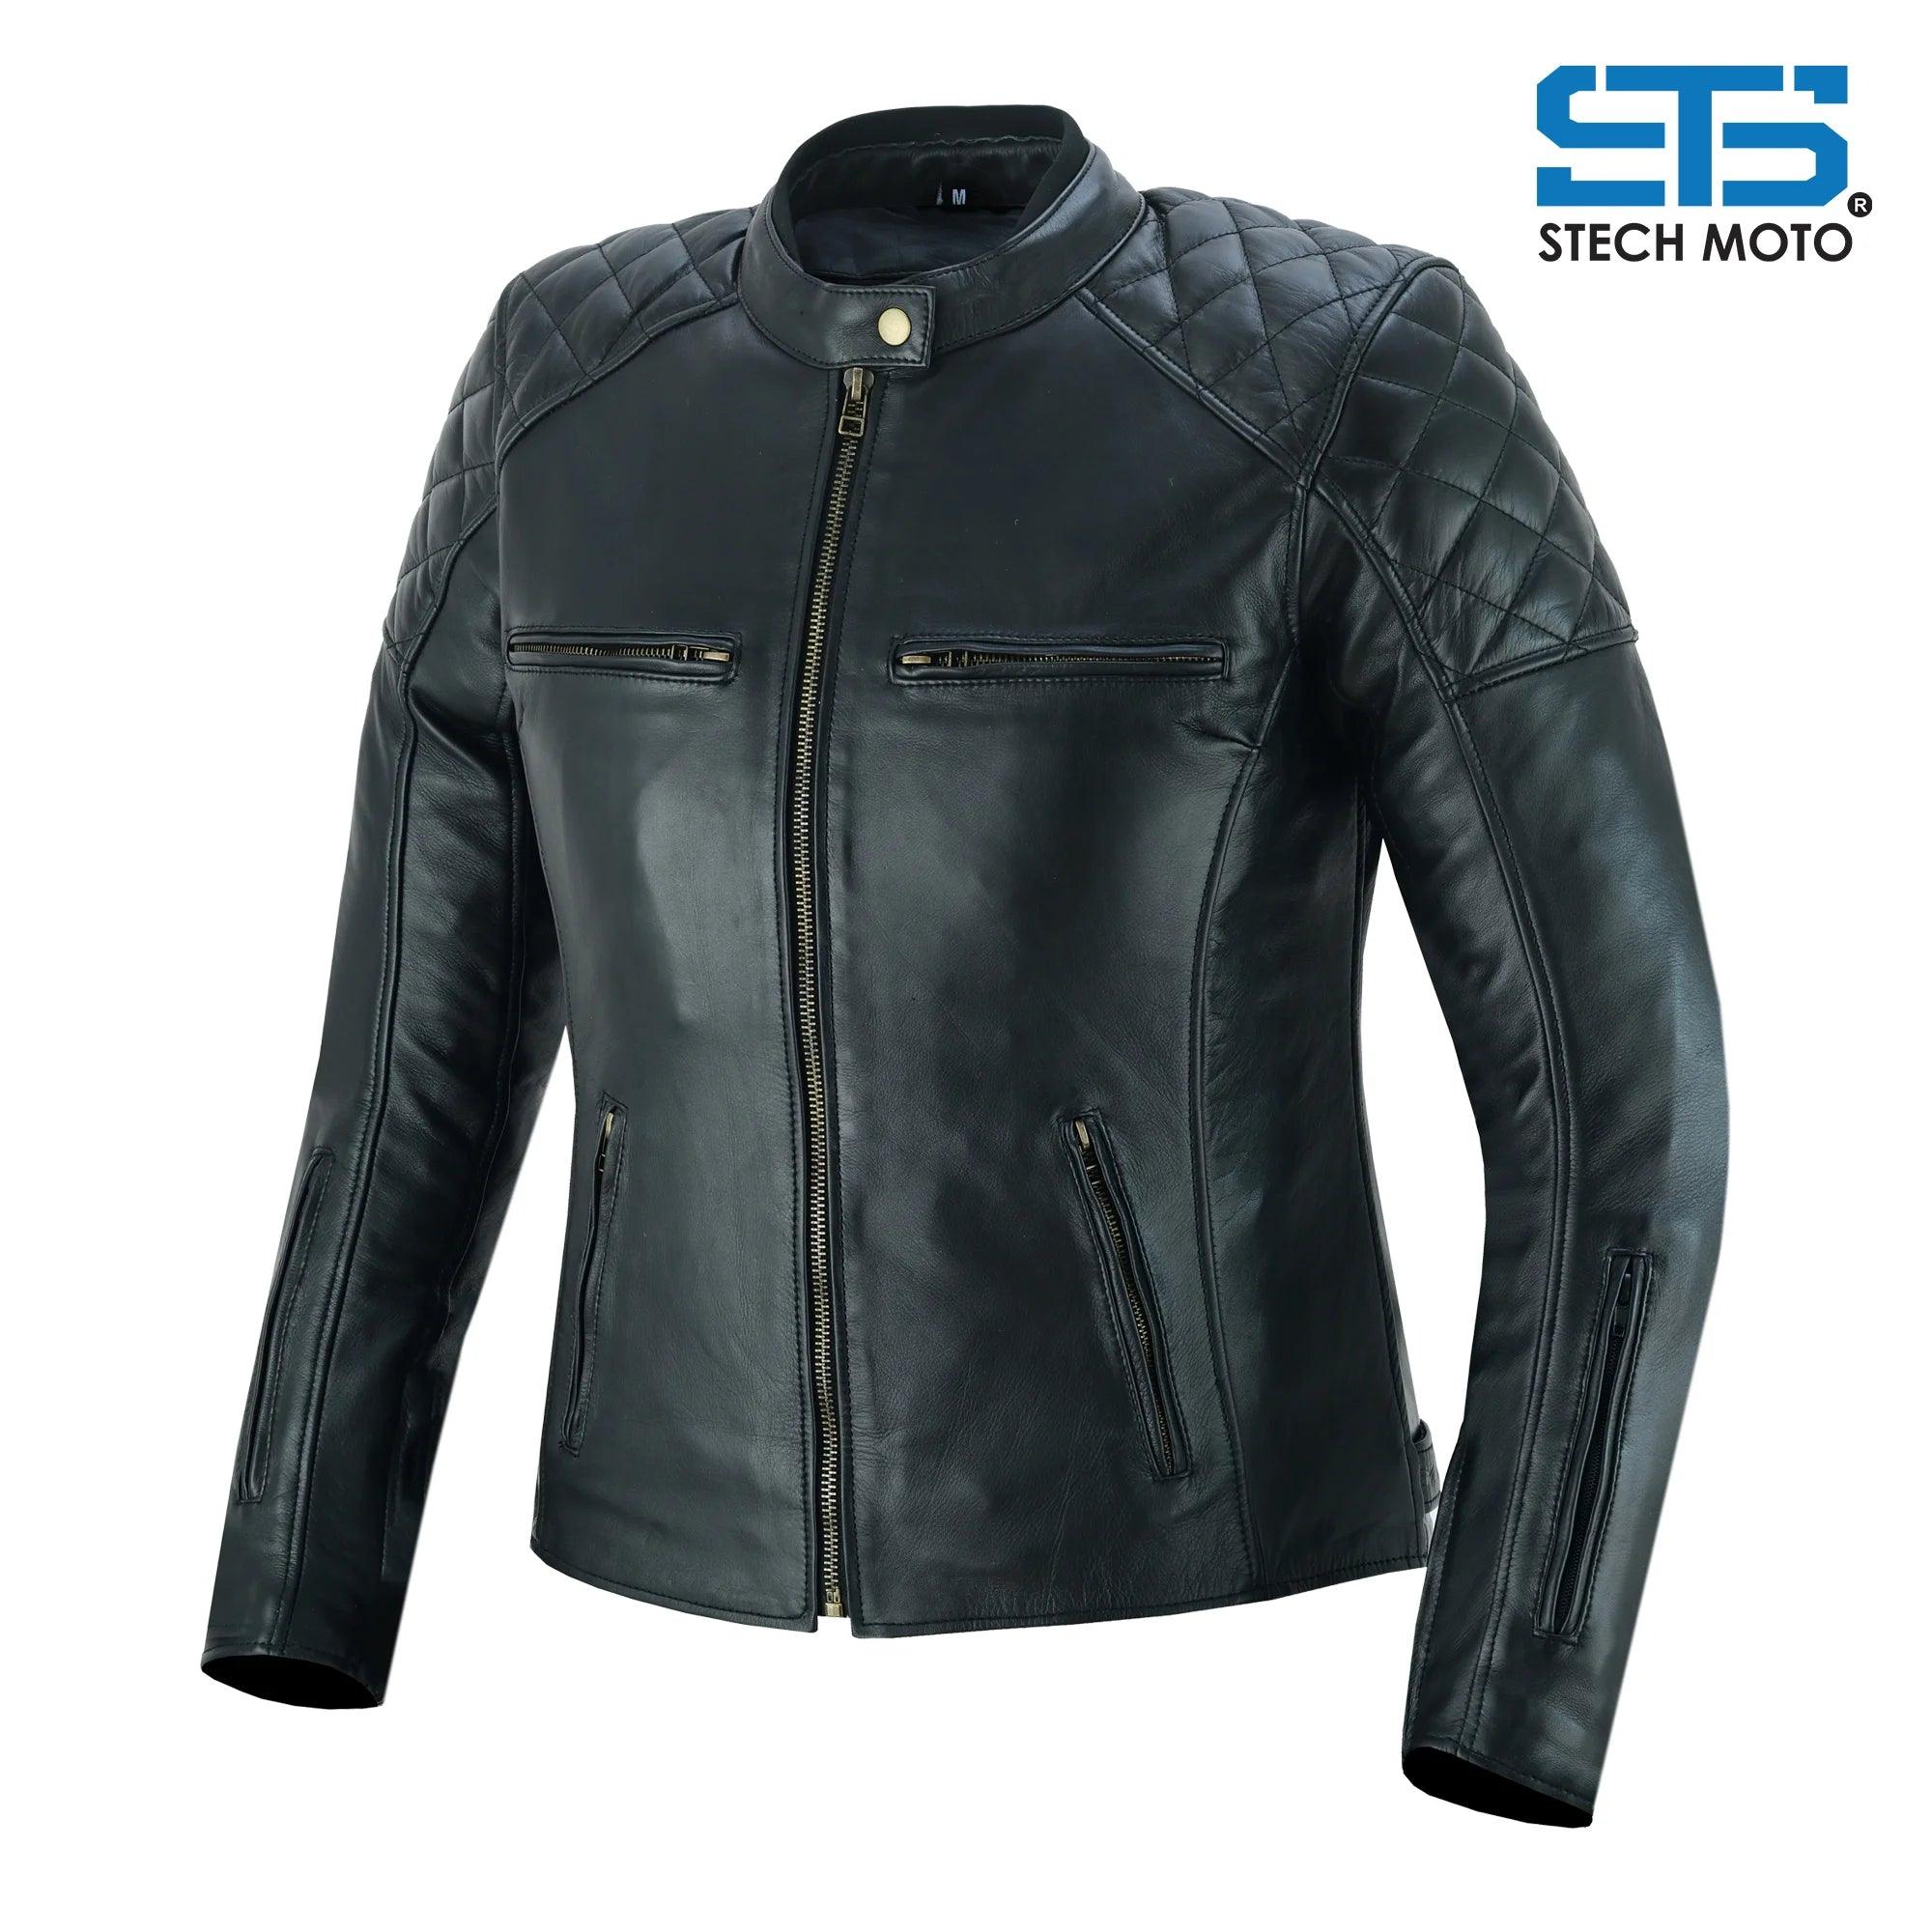 Moto giacca in Pelle Stechmoto ST 1710 Quintus Custom Vintage e Cafe Race - Am Moto-Abbigliamento Moto